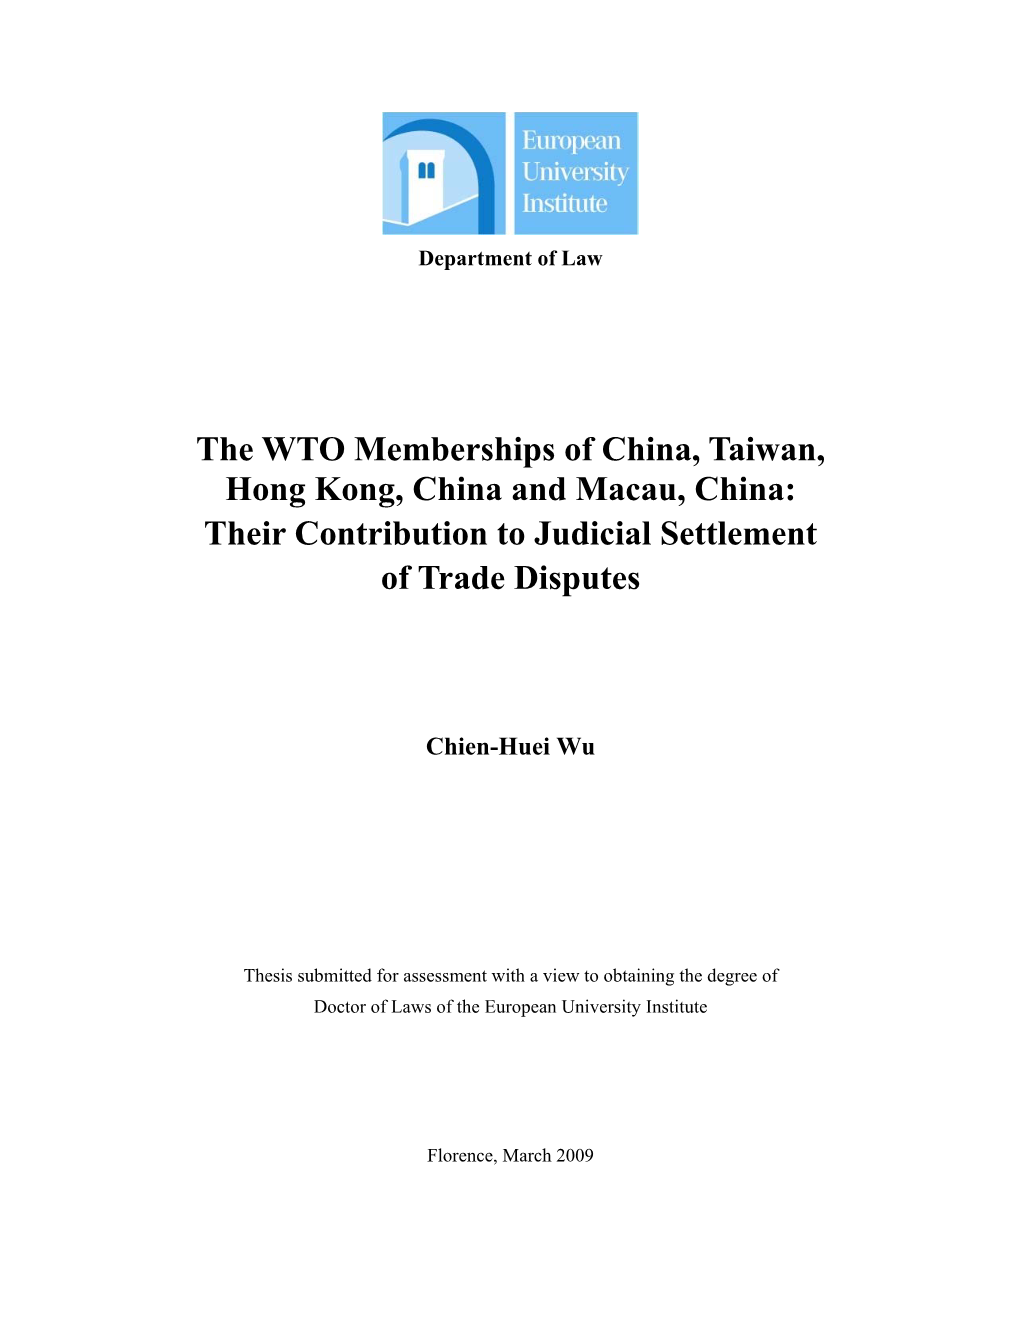 The WTO Memberships of China, Taiwan, Hong Kong, China and Macau, China: Their Contribution to Judicial Settlement of Trade Disputes